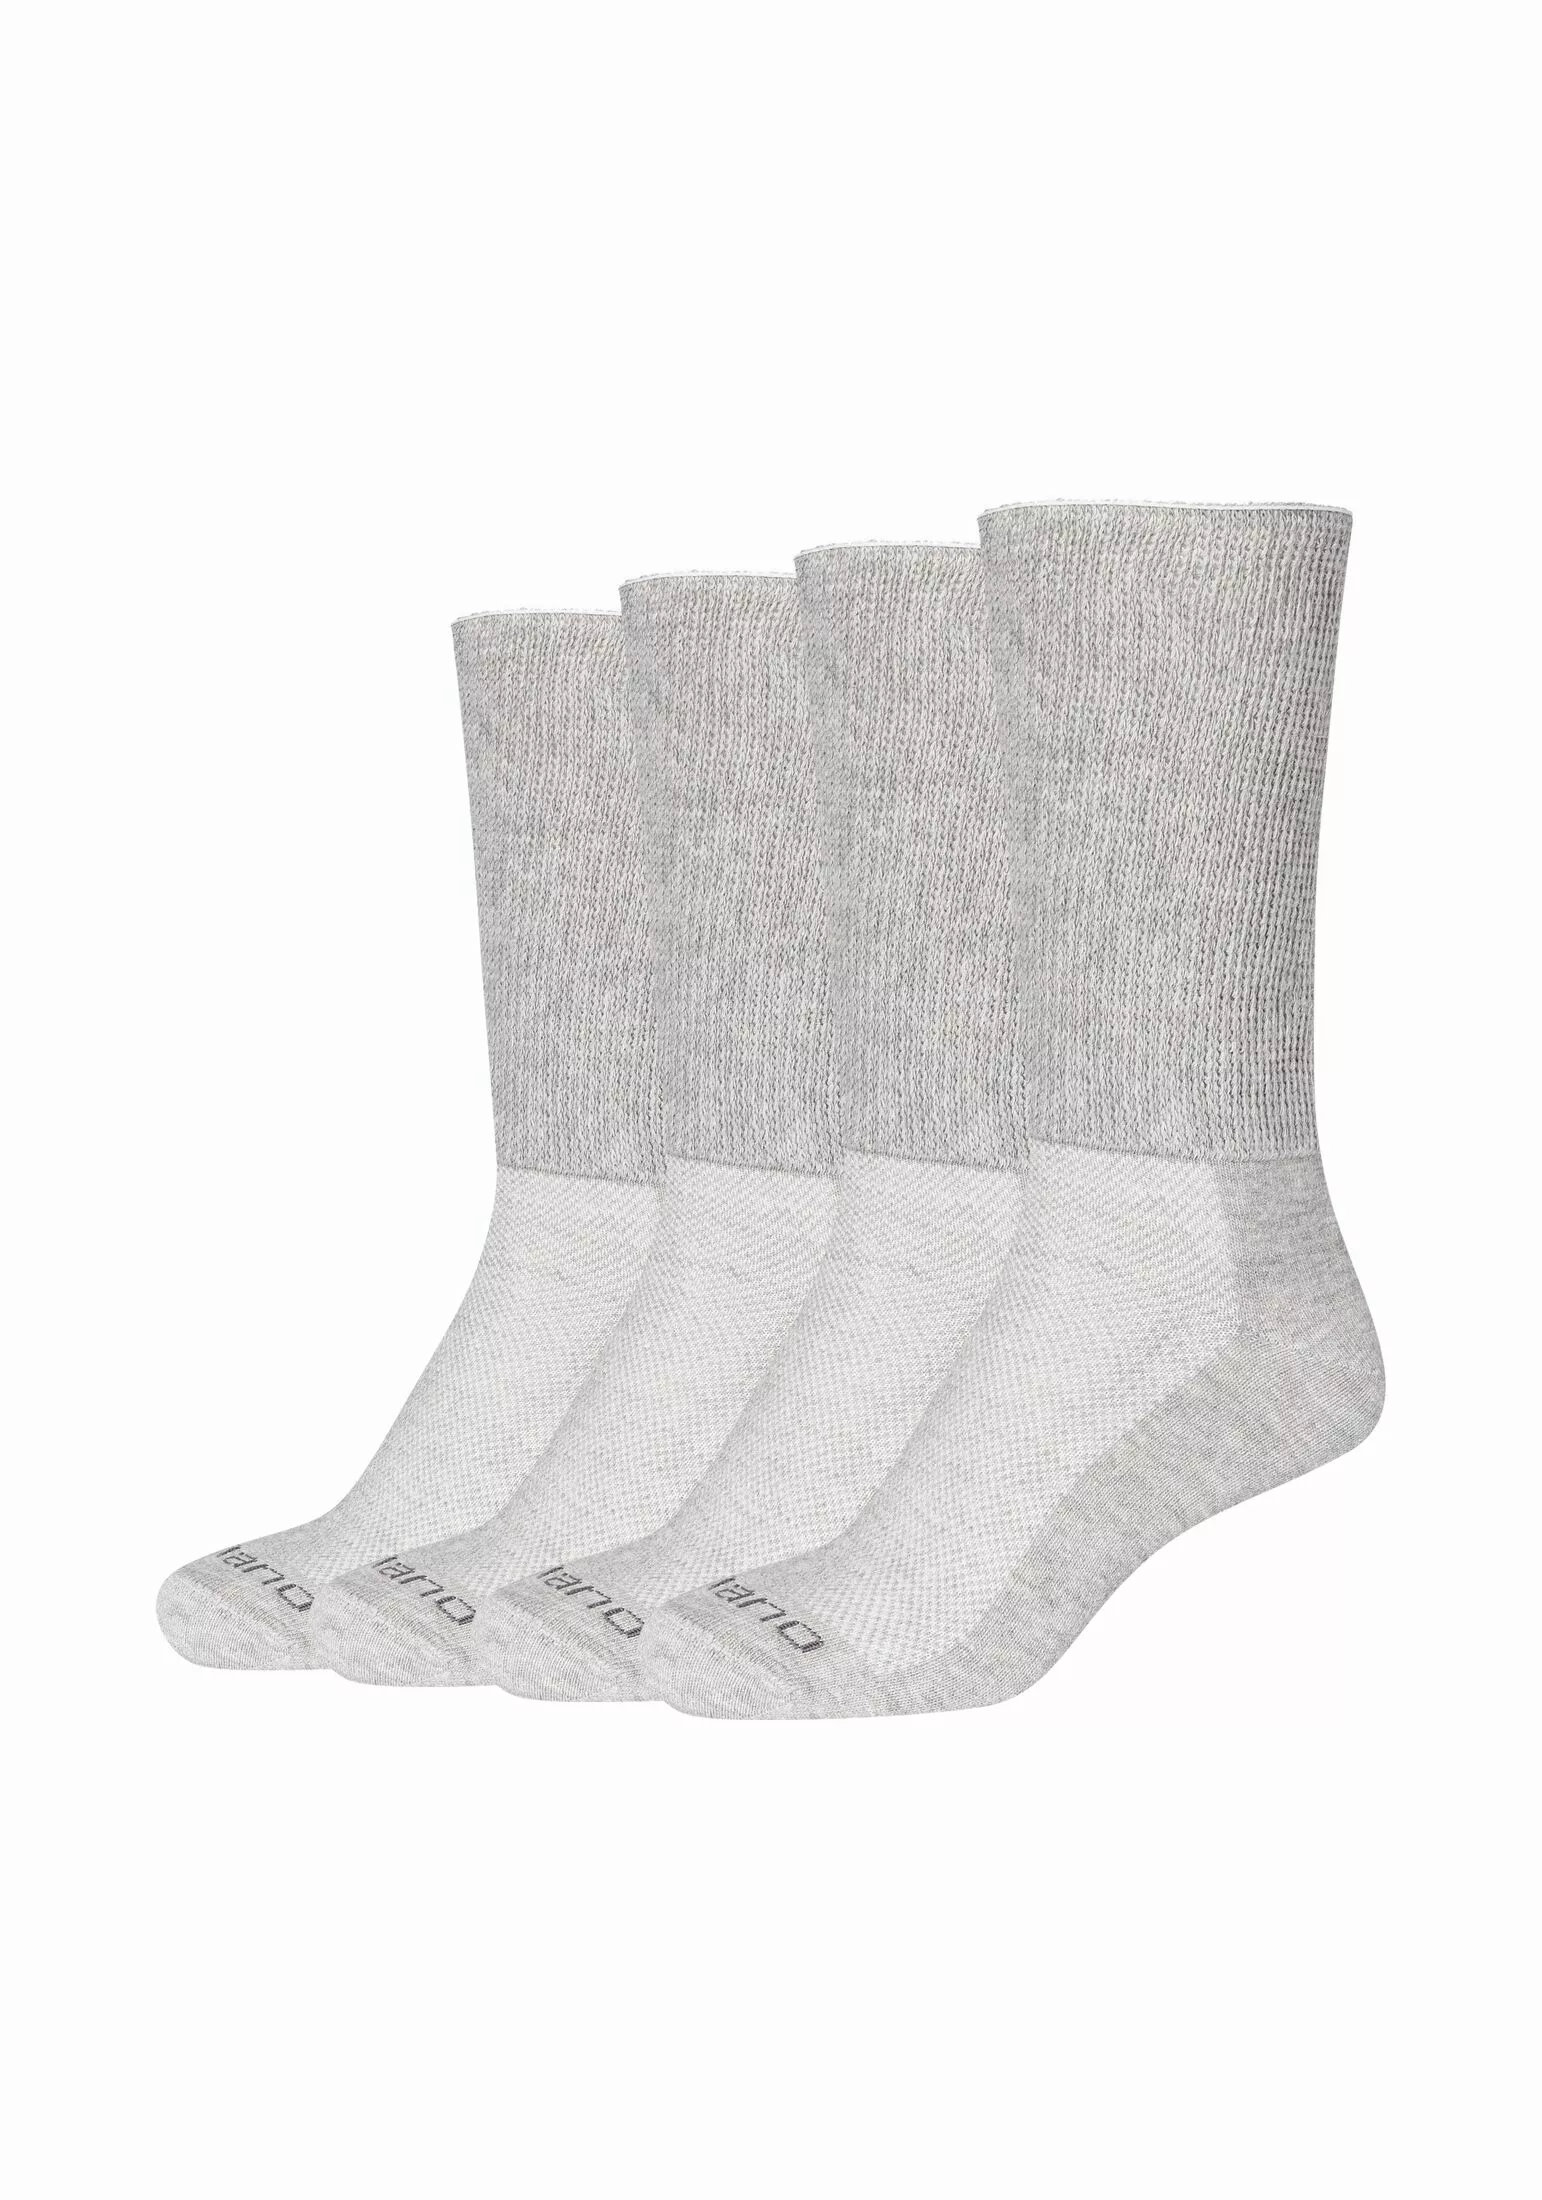 Camano Socken "Diabetikersocken 4er Pack" günstig online kaufen